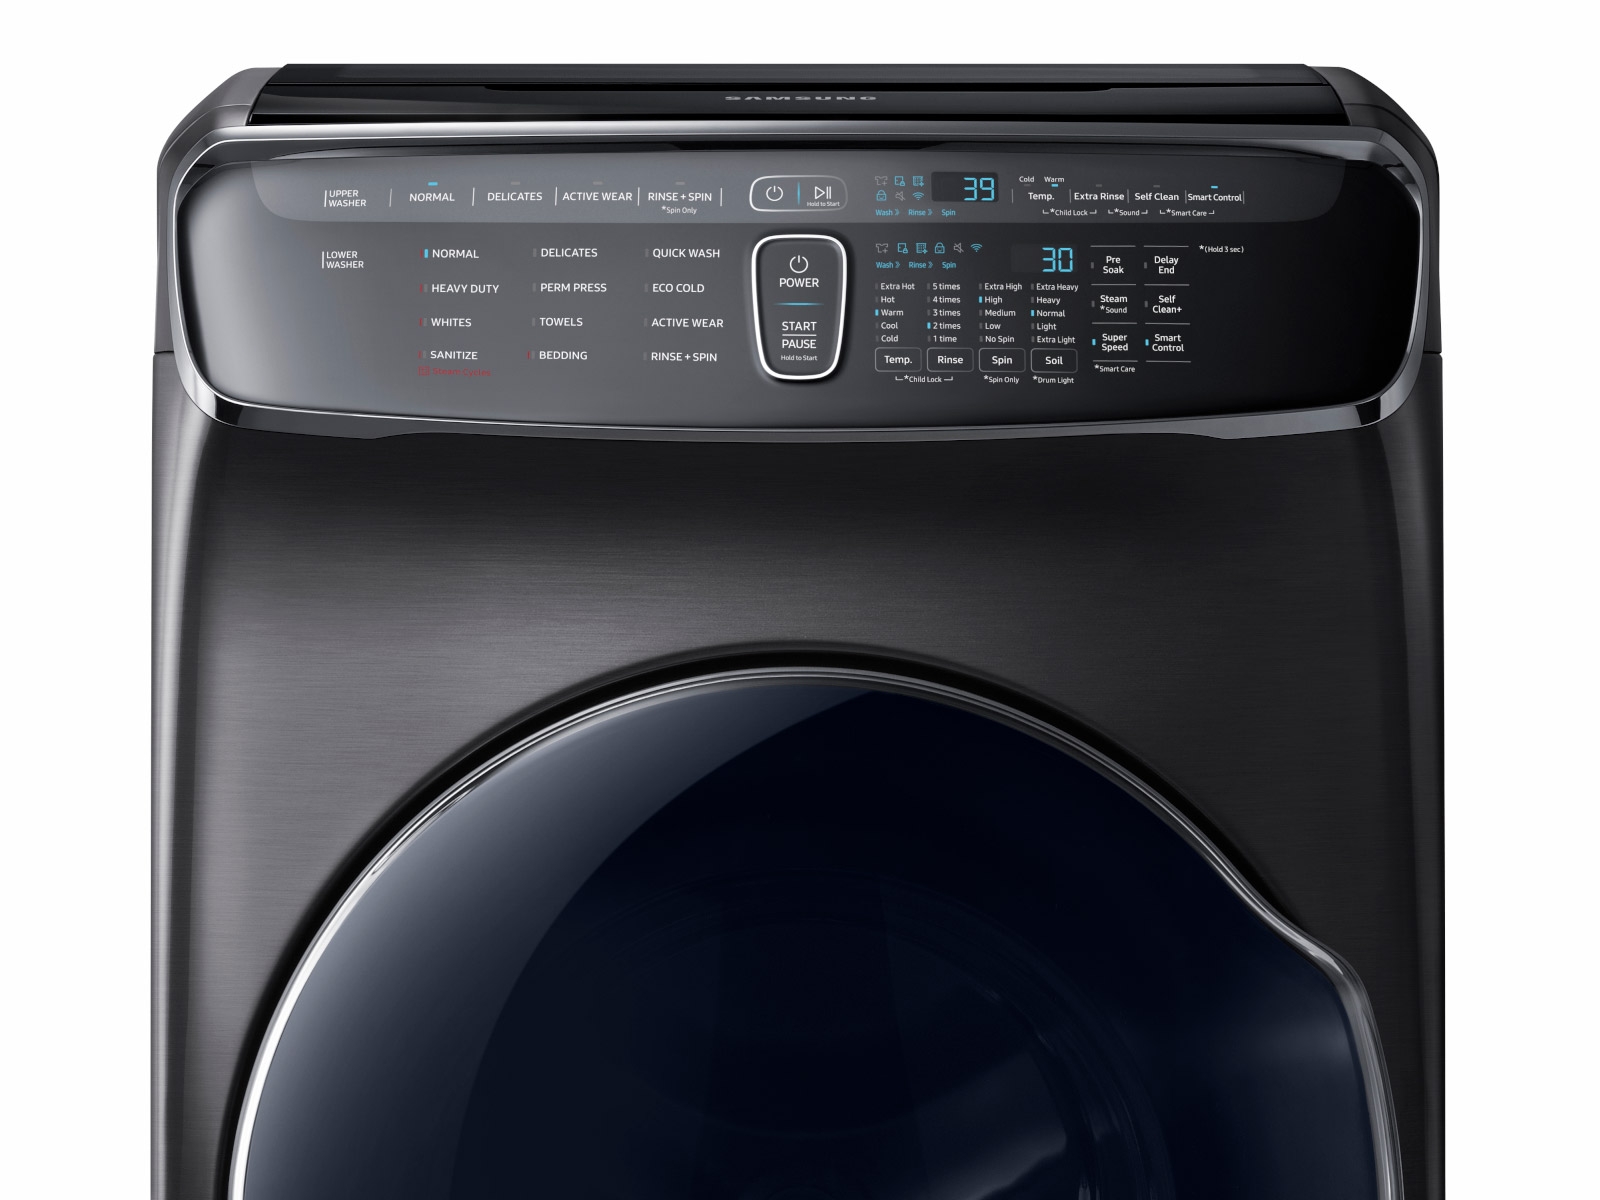 Samsung WV9900 FlexWash Washing Machine Review